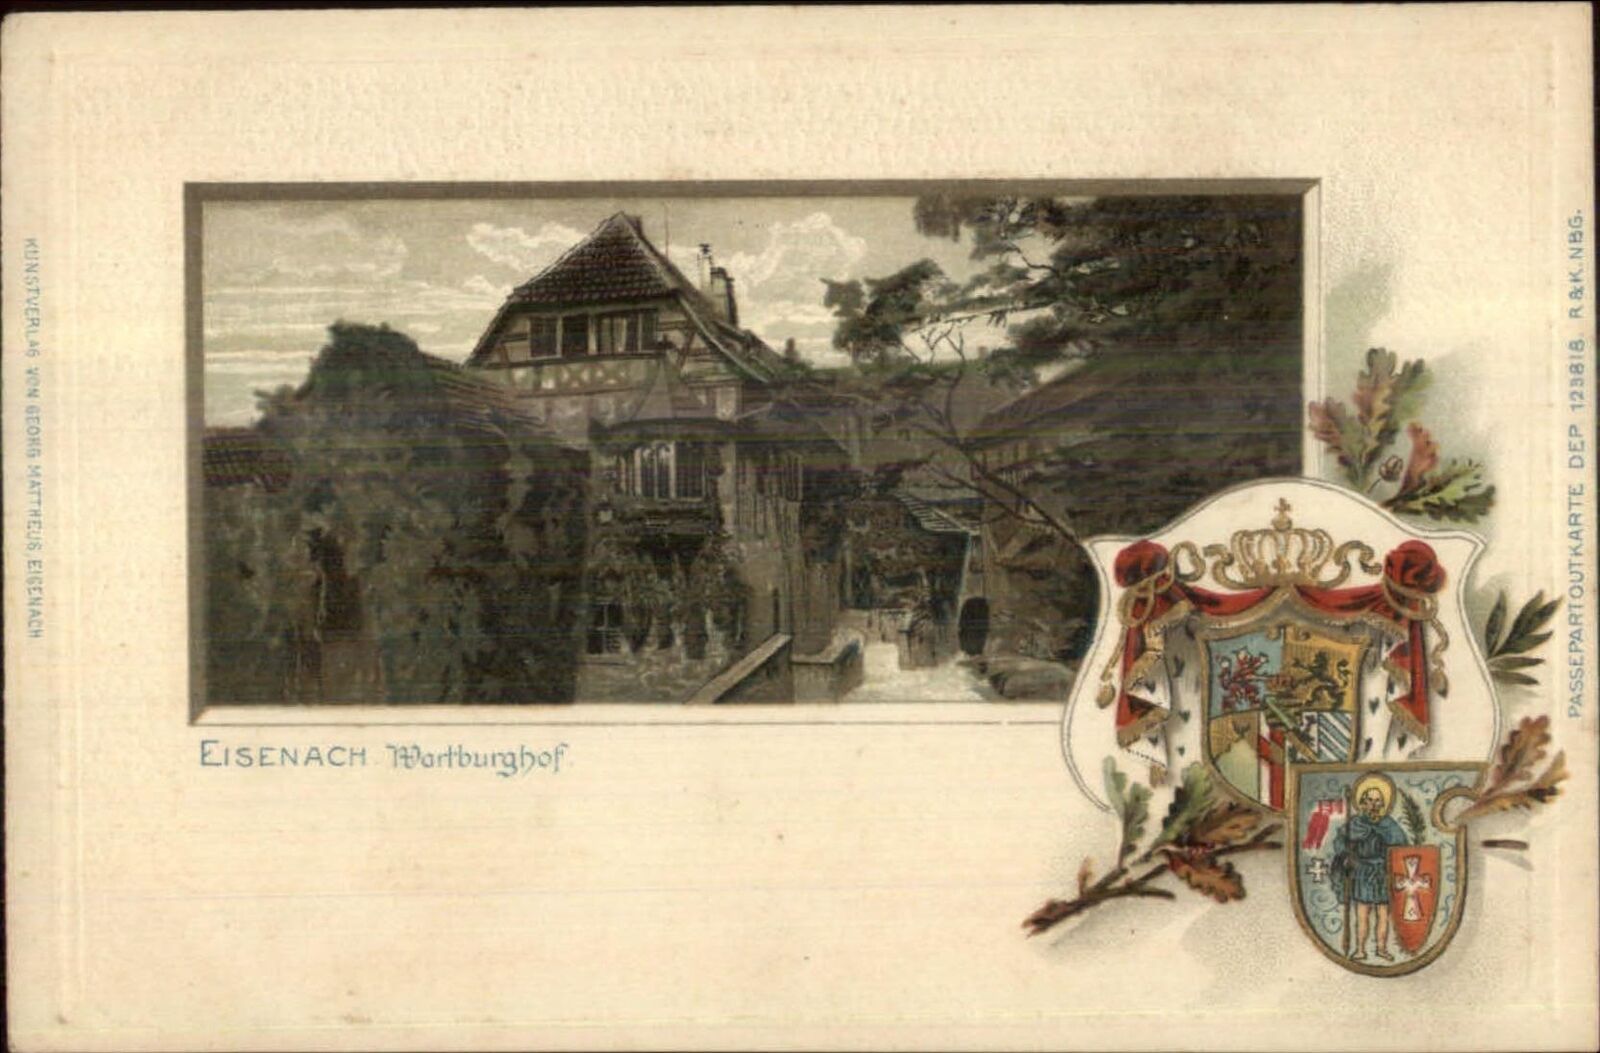 Eisenach Germany Wartburghof - Heraldic Shield Border c1905 Postcard